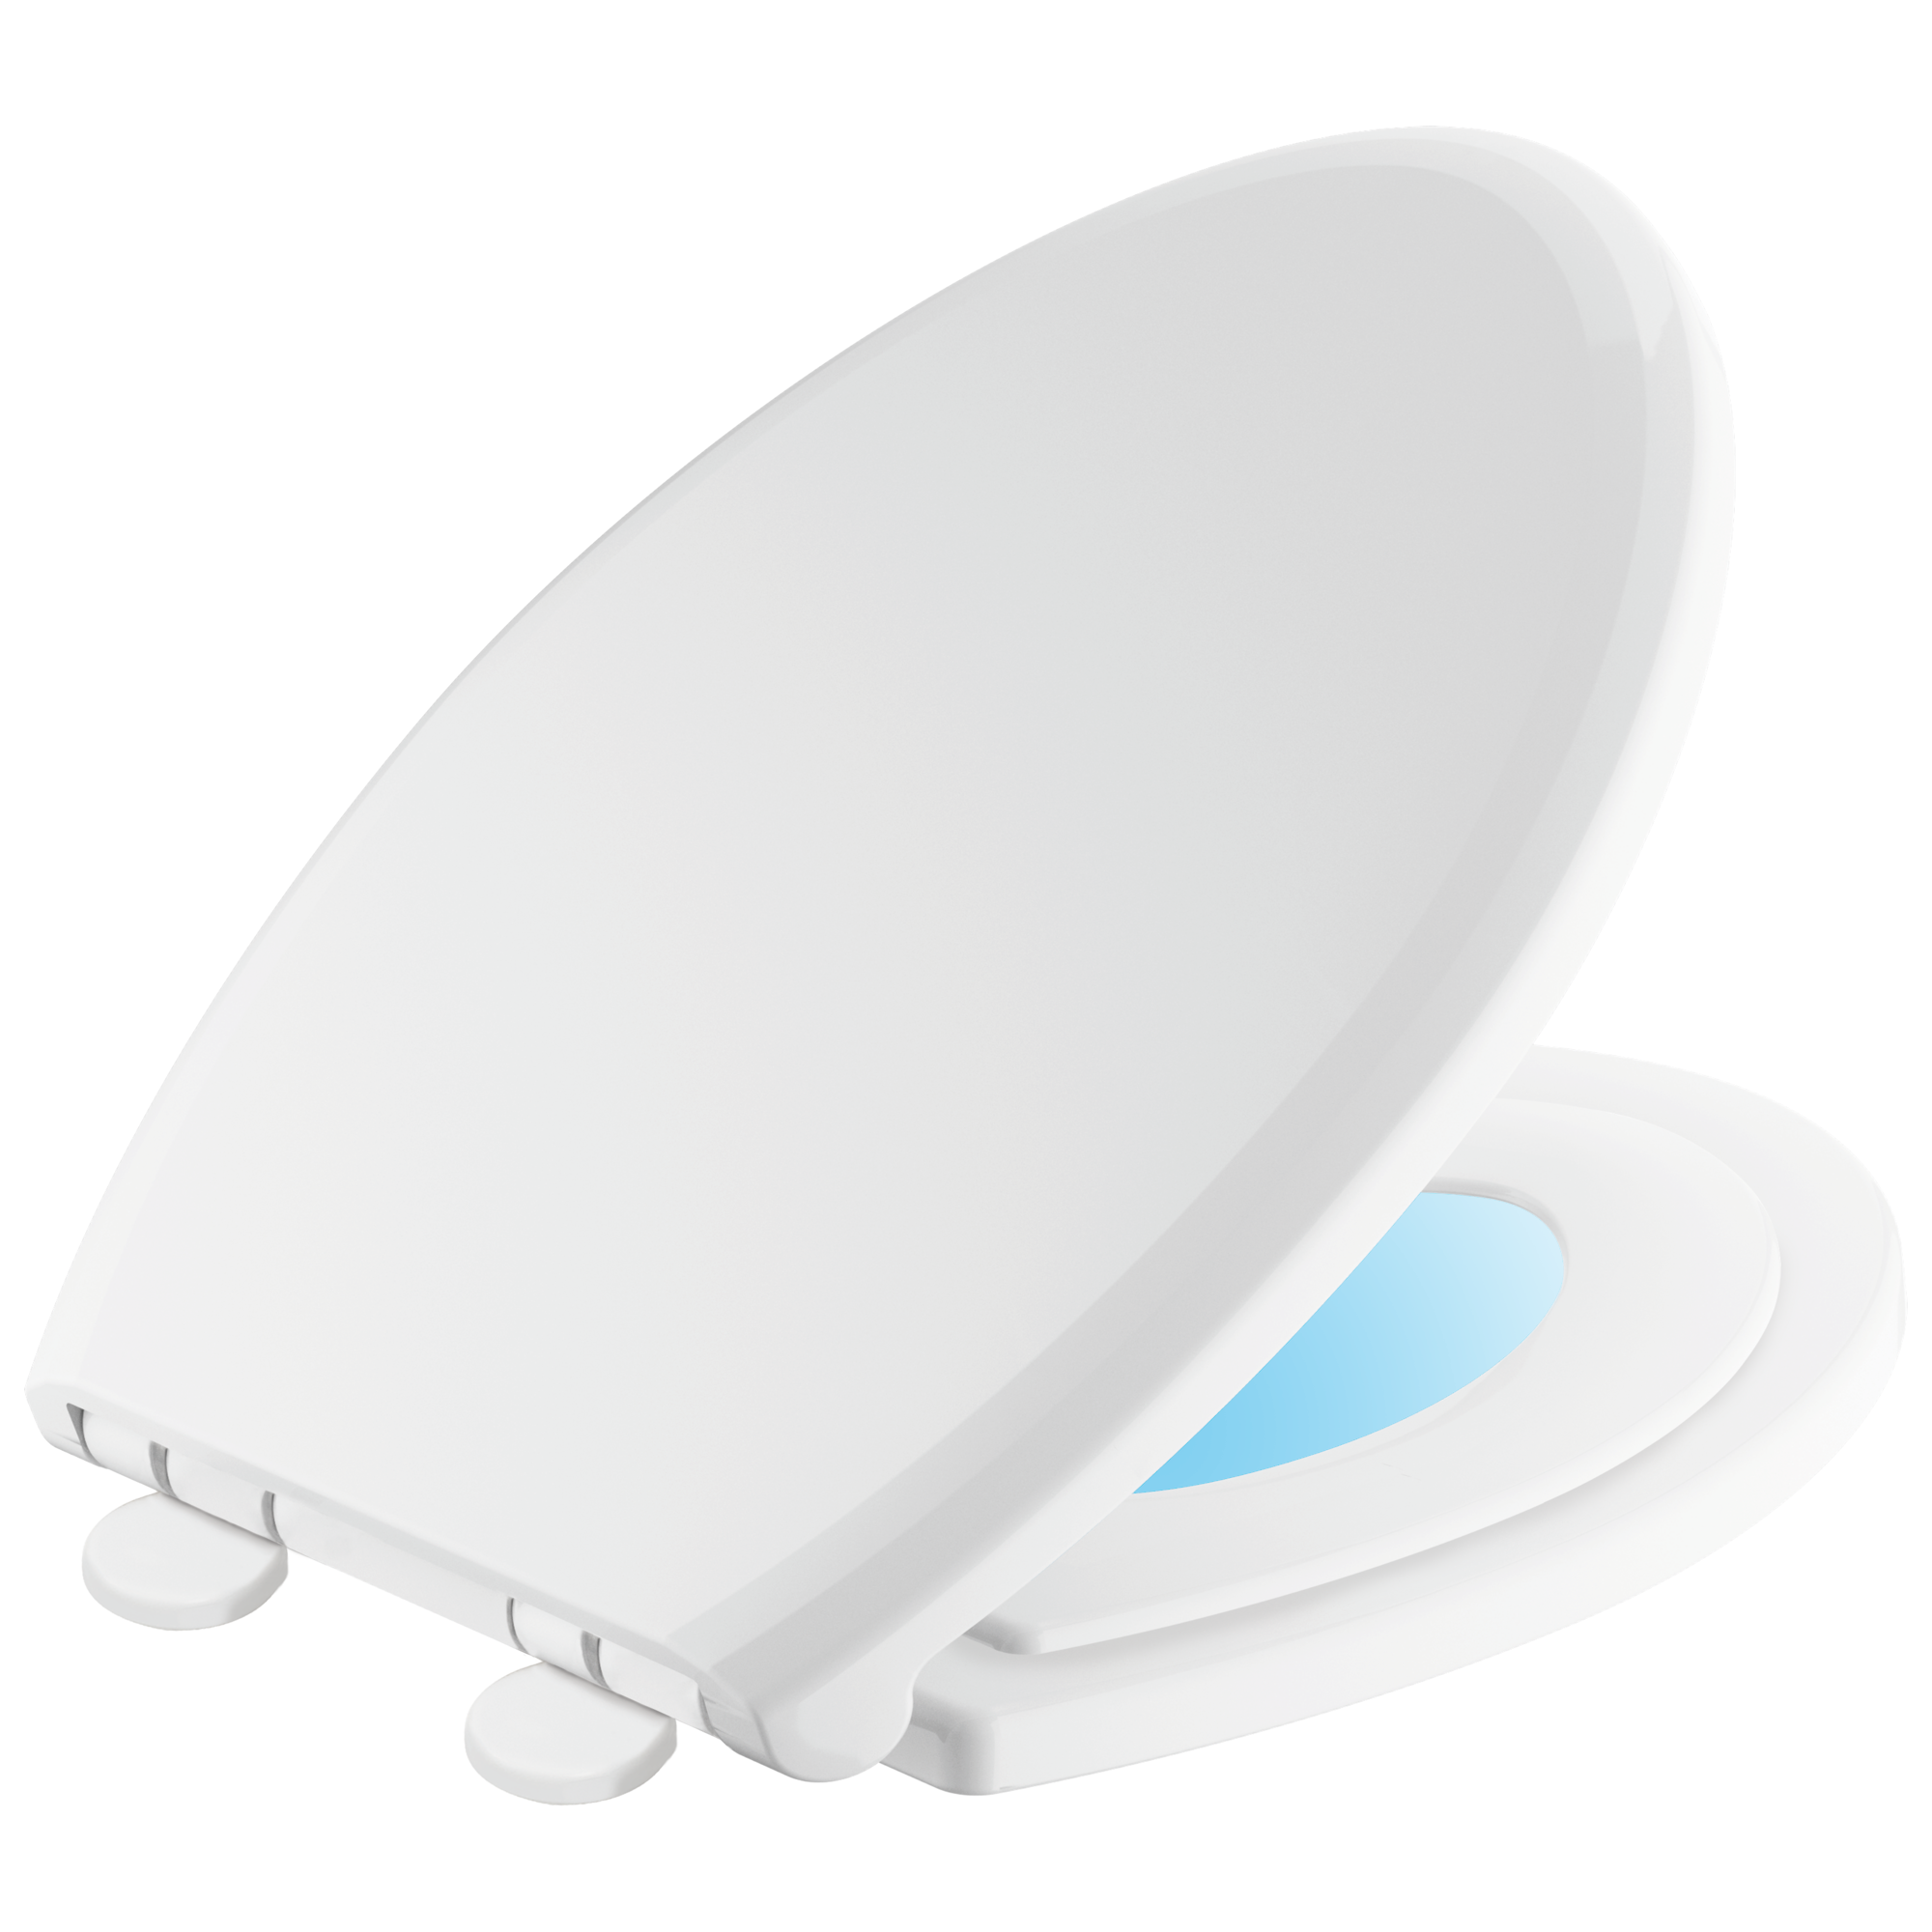 Delta 833902-n-wh Sanborne Elongated Potty Training Nightlight Toilet Seat for sale online